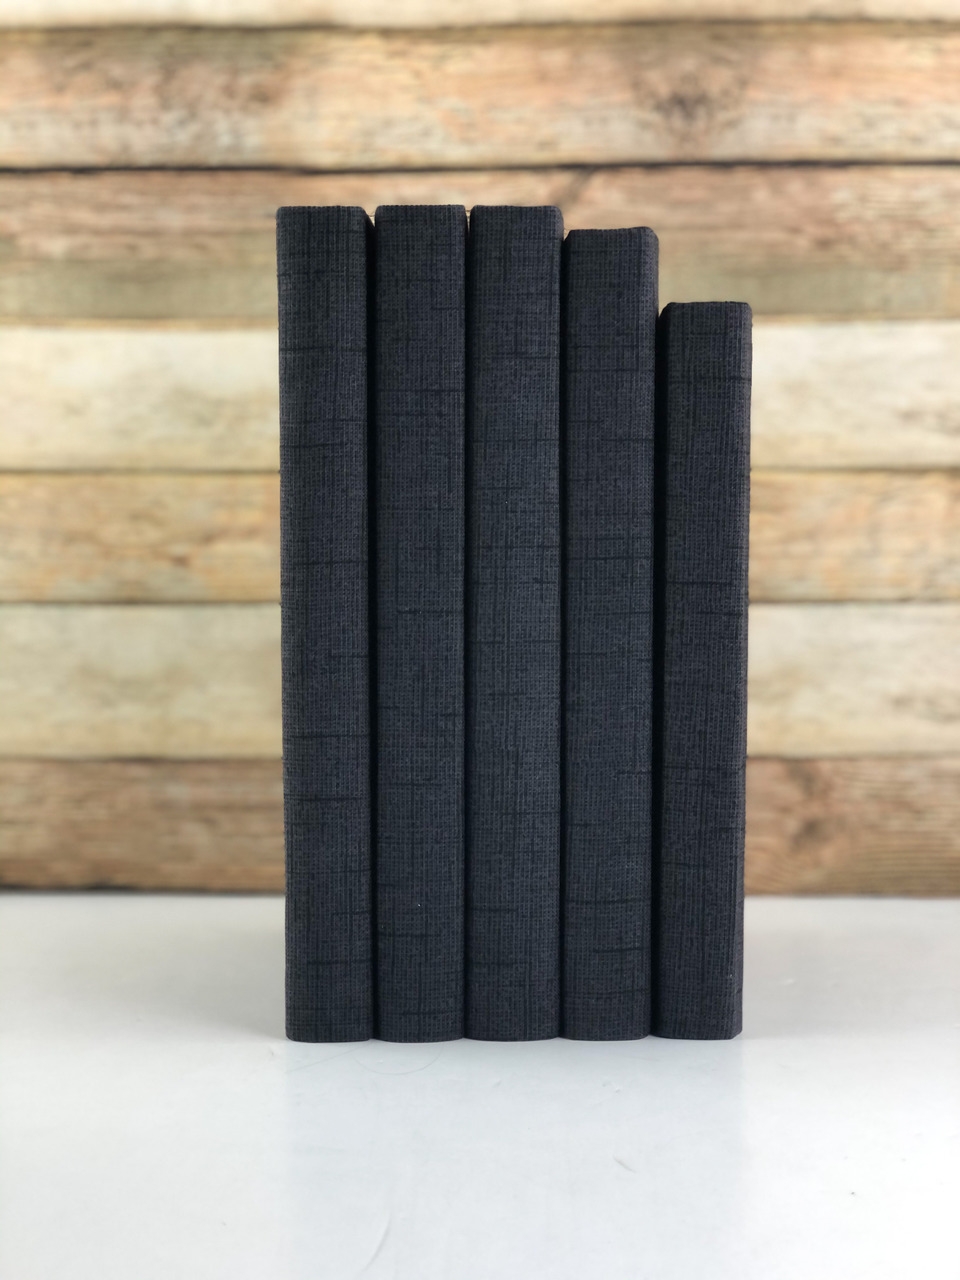 Decorative Books, Textured Black, Set of 5 - Image 0